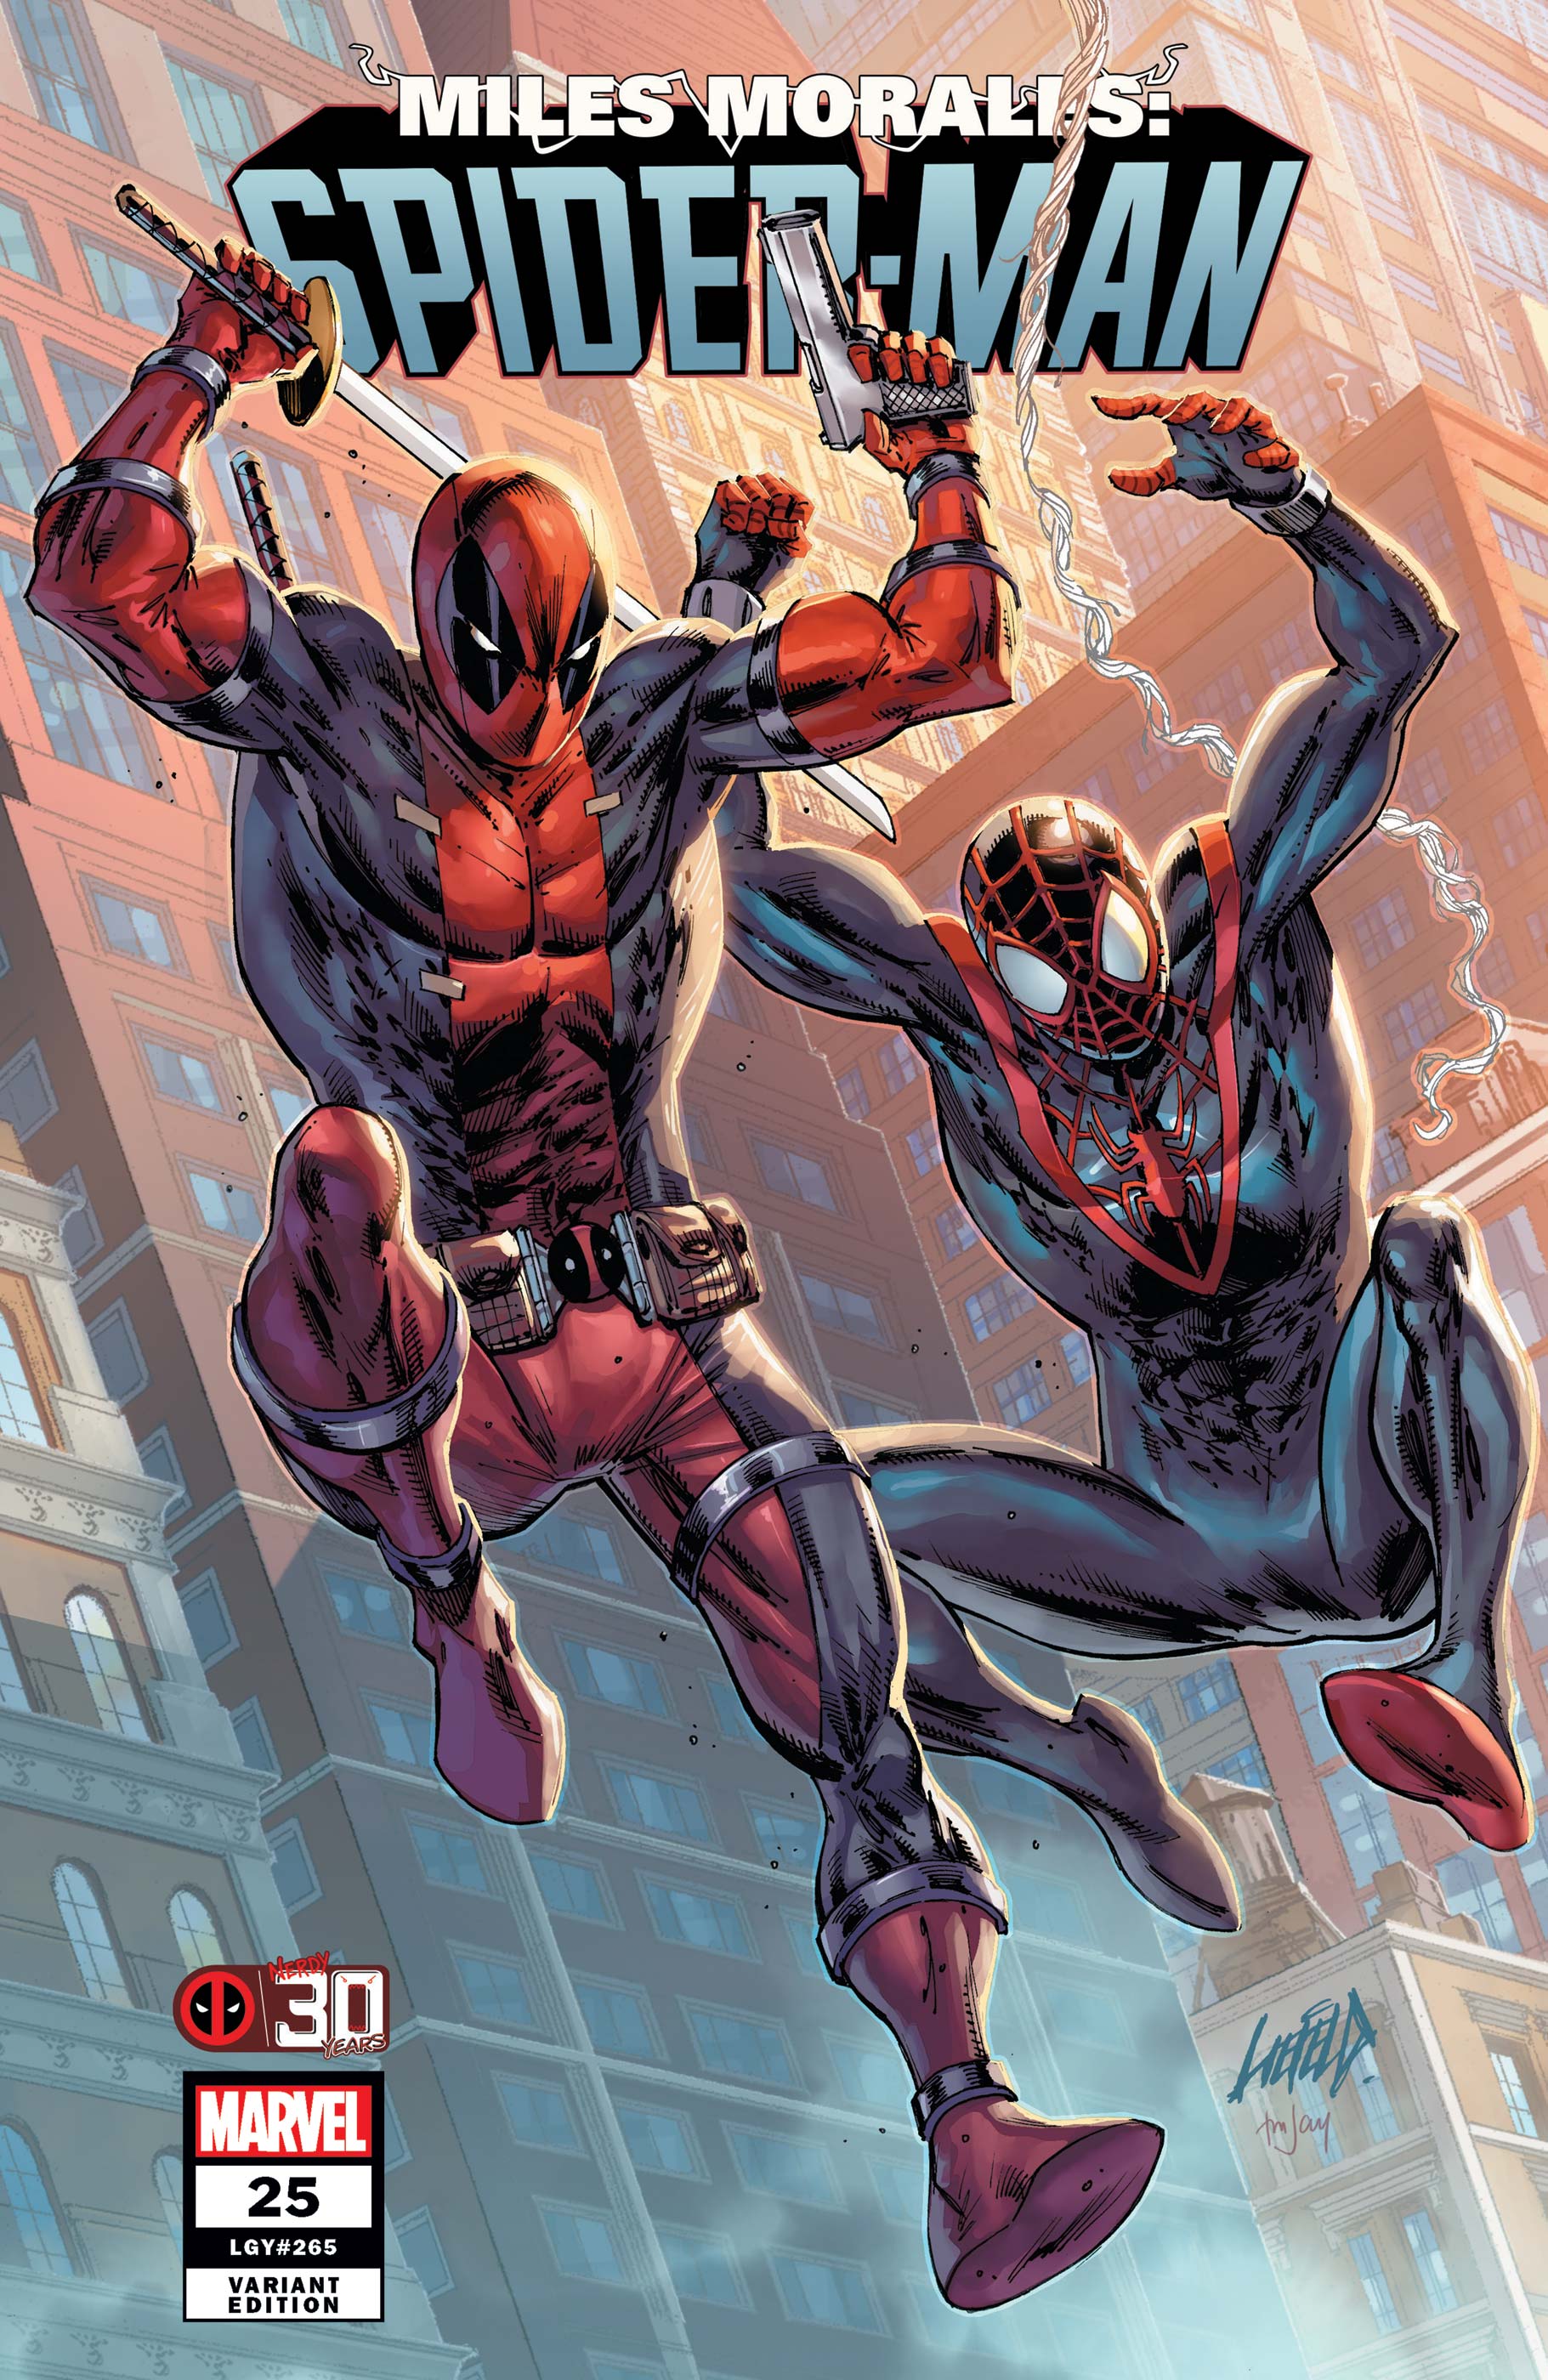 Miles morales spider-man #25